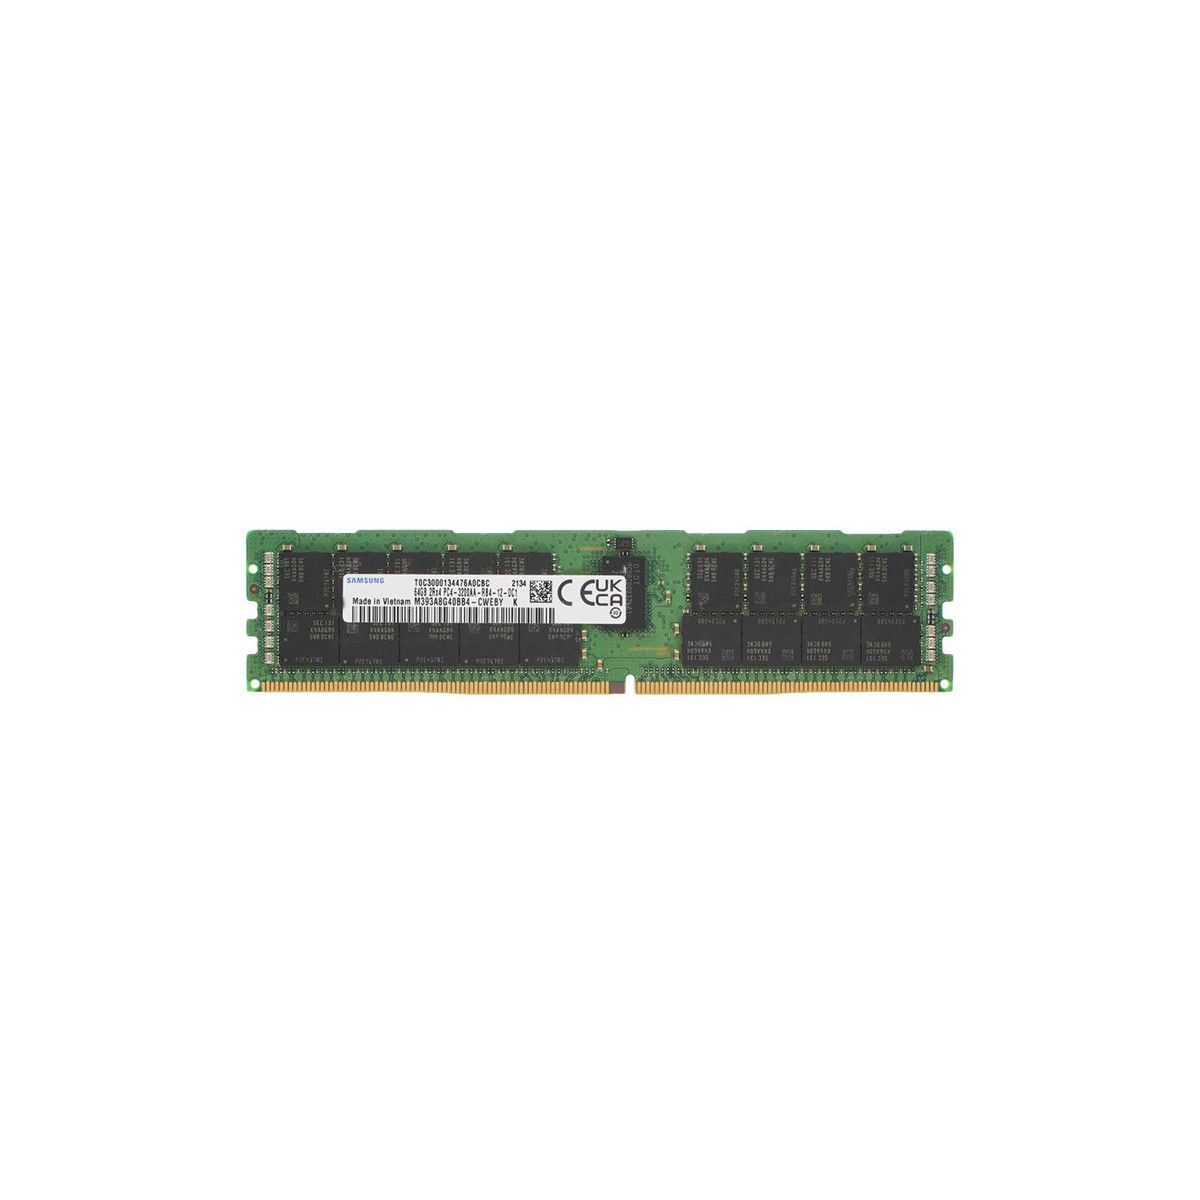 AB214253-MS - Memstar 1x 64GB DDR4-3200 RDIMM PC4-25600R - Mem-Star Compatible OEM Memory 1 - Memstar 